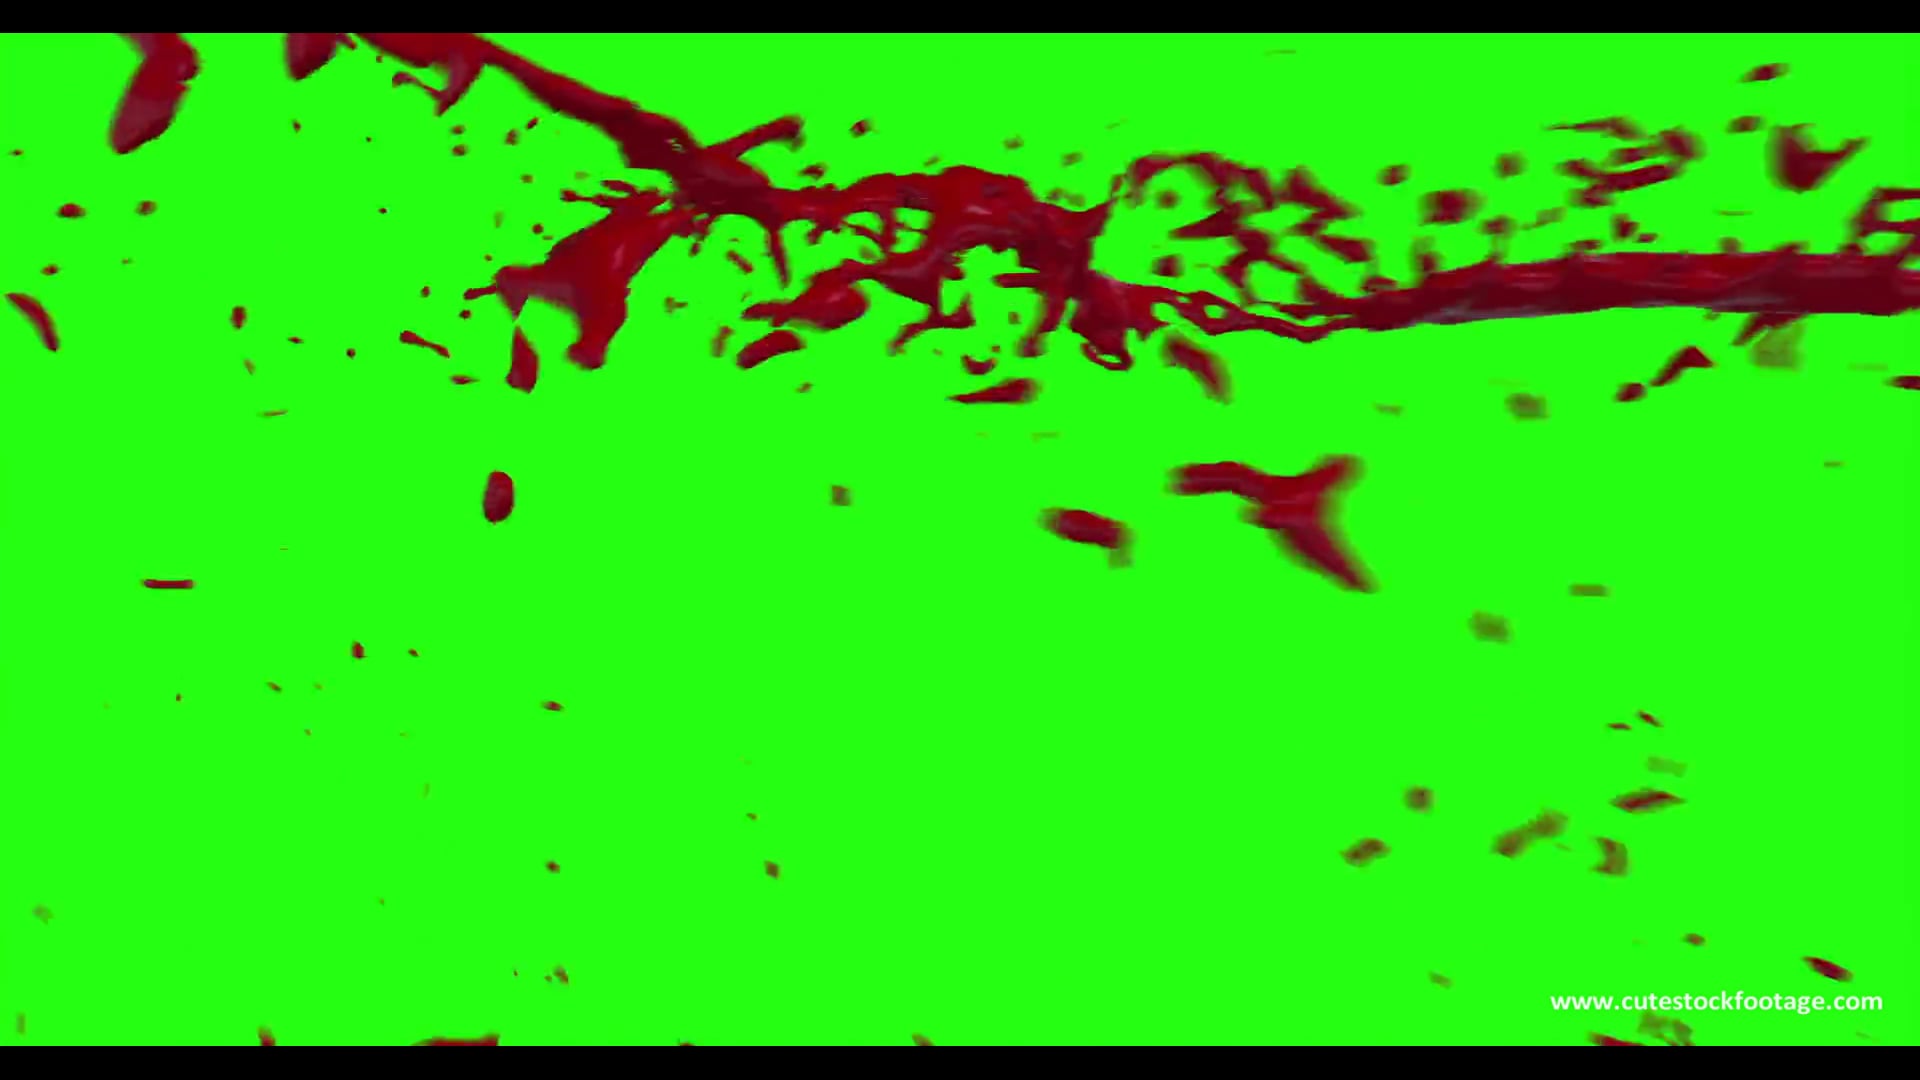 Blood splatter video effect free download for pc